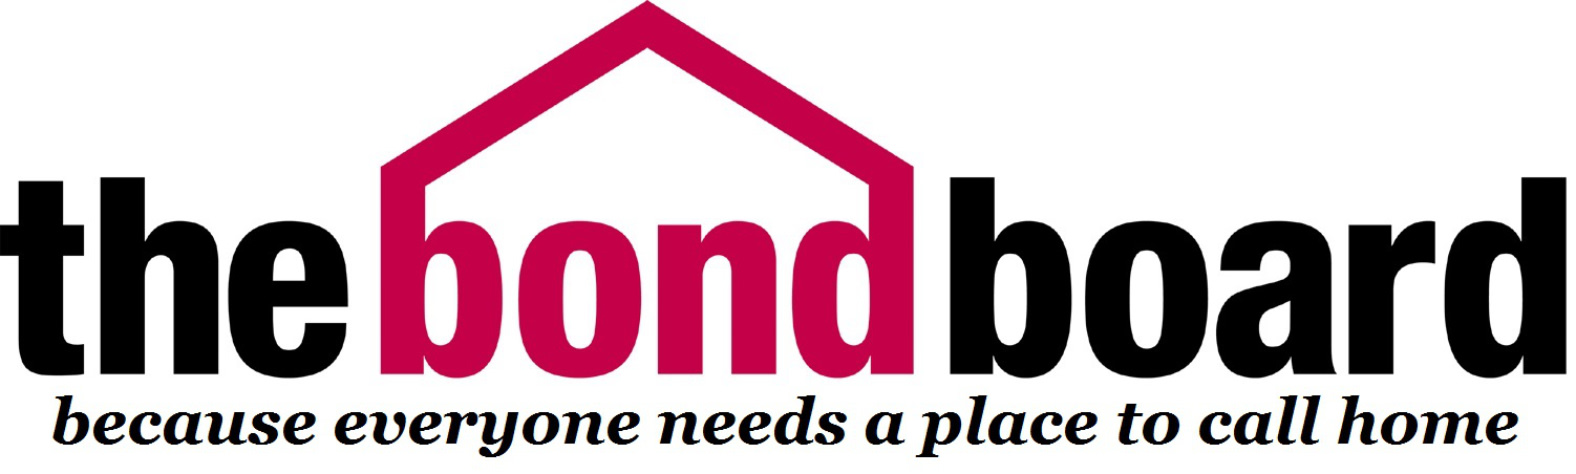 Services partnership logo for Bond ltd